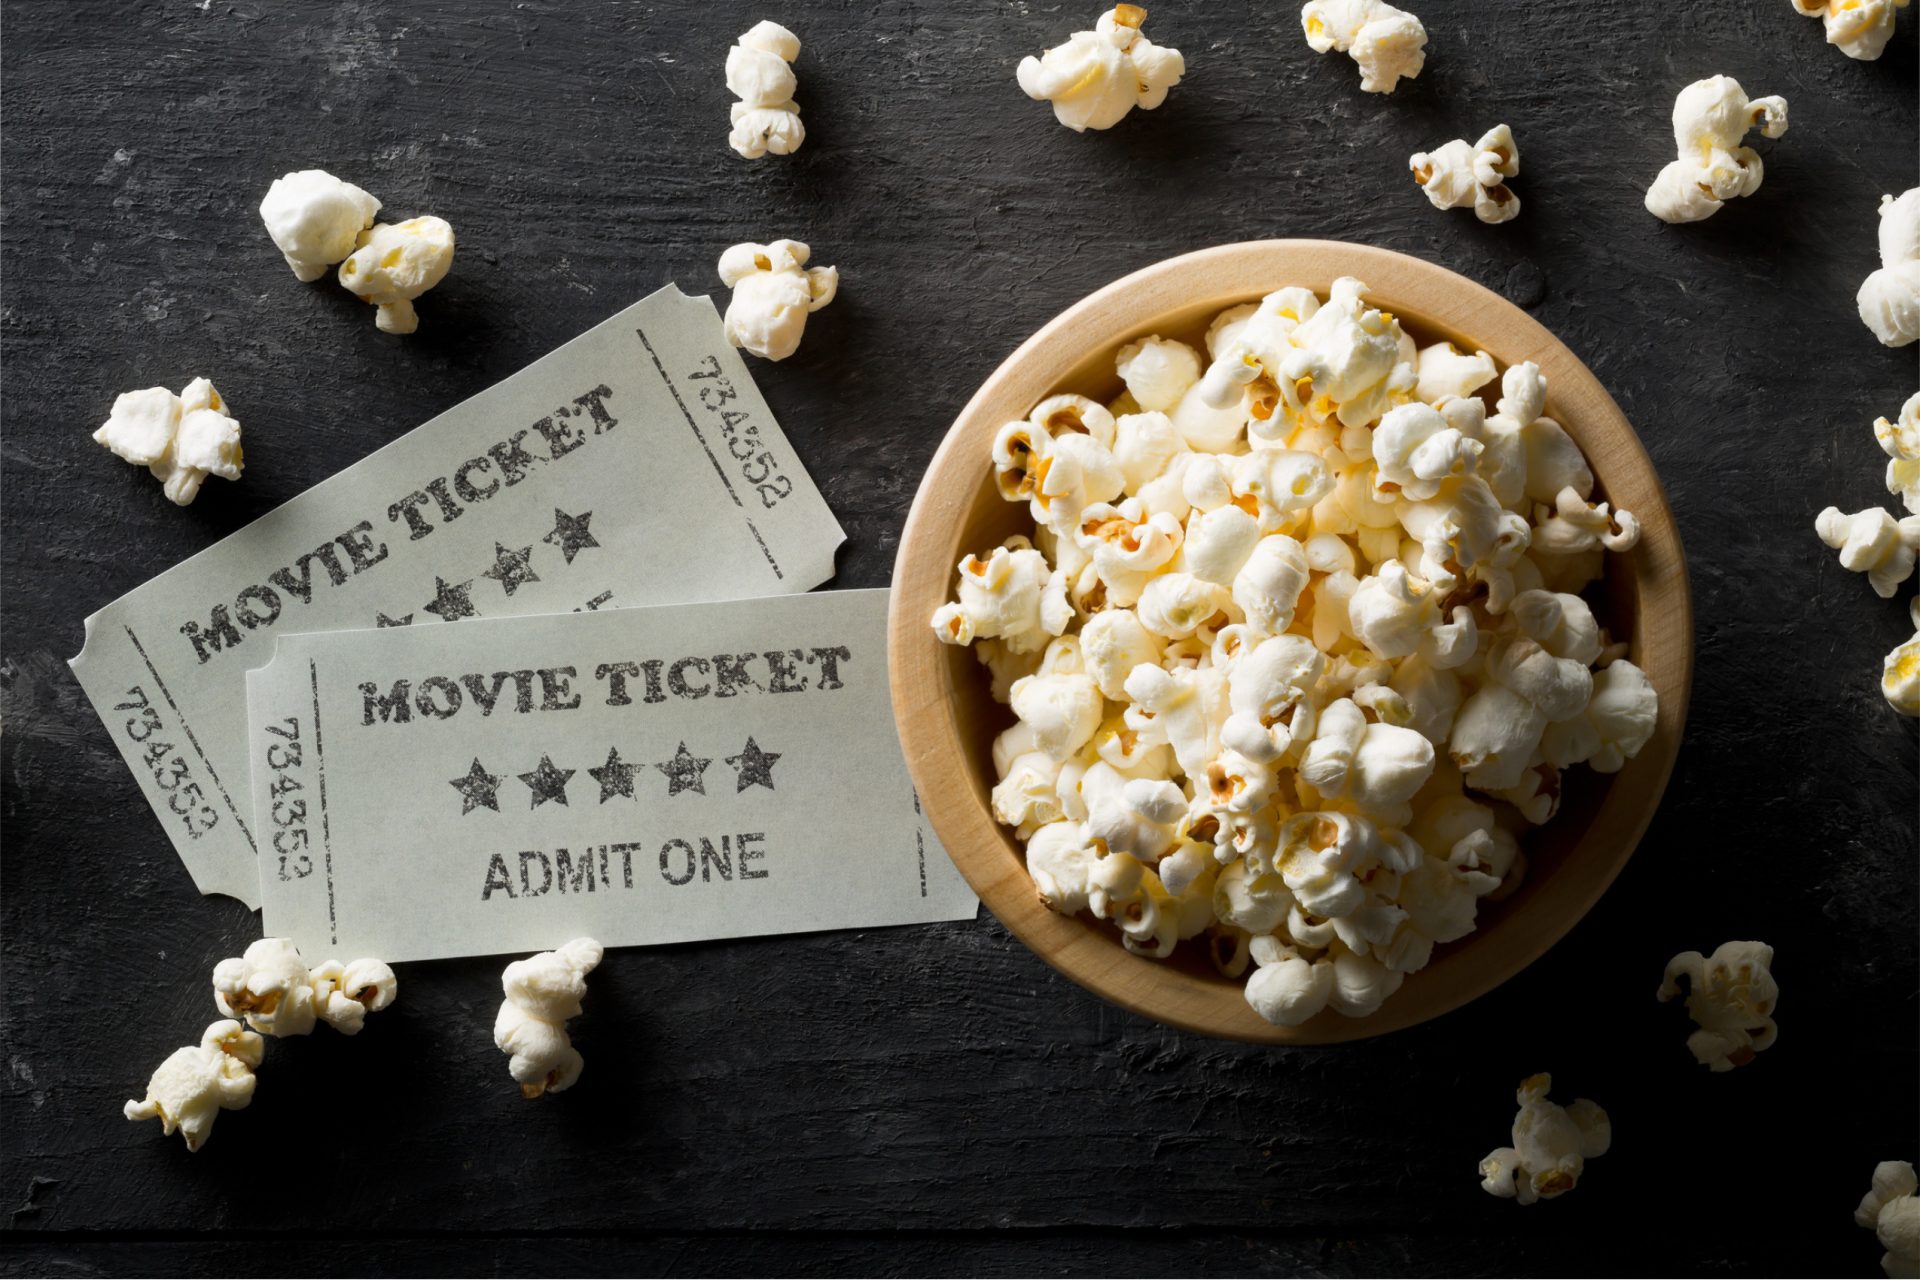 popcorn and movie tickets